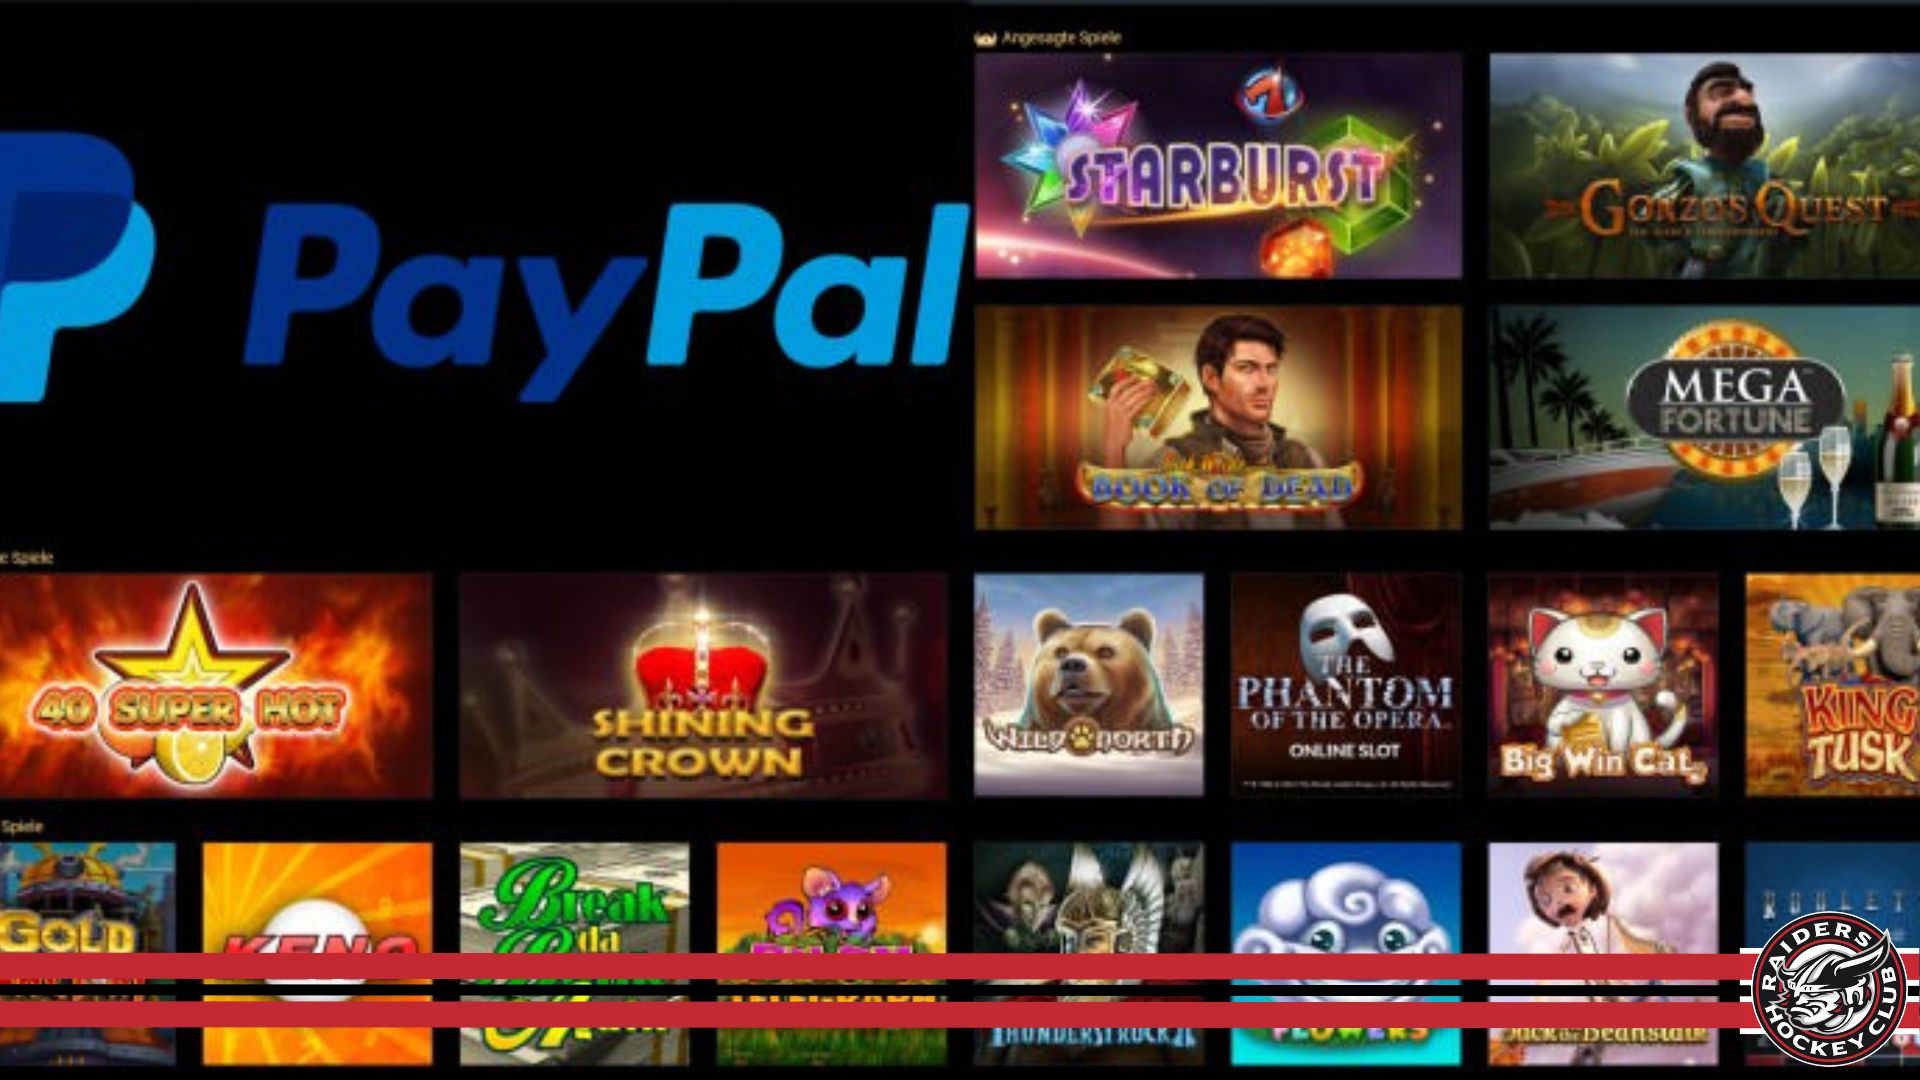 paypal casinos